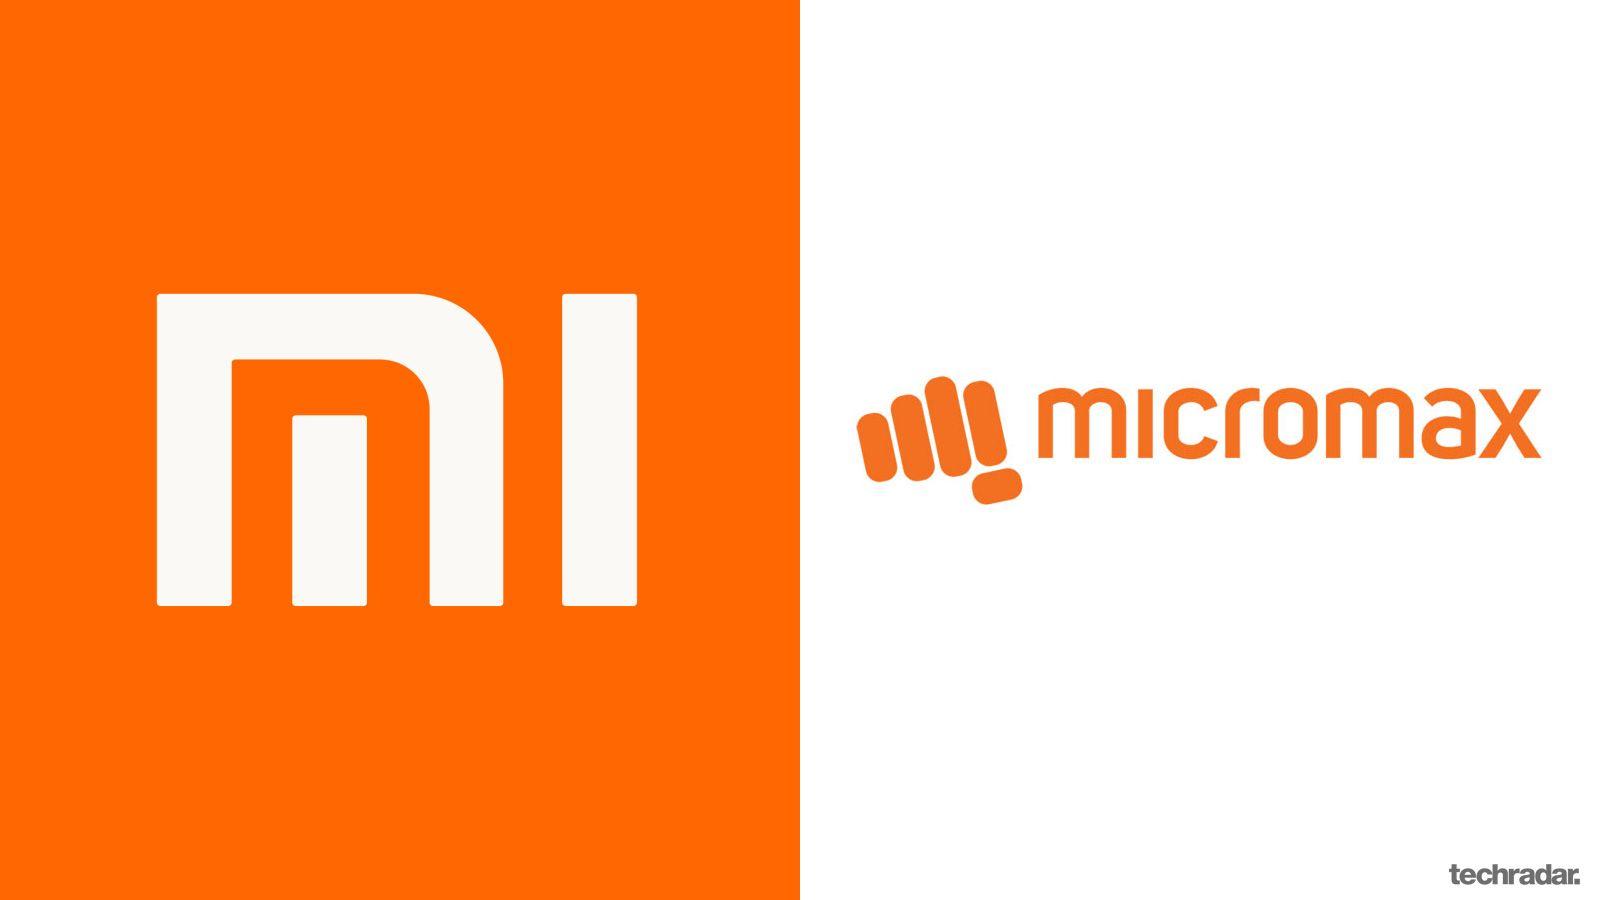 Micromax Logo - Xiaomi vs Micromax: A tale of two smartphone brands